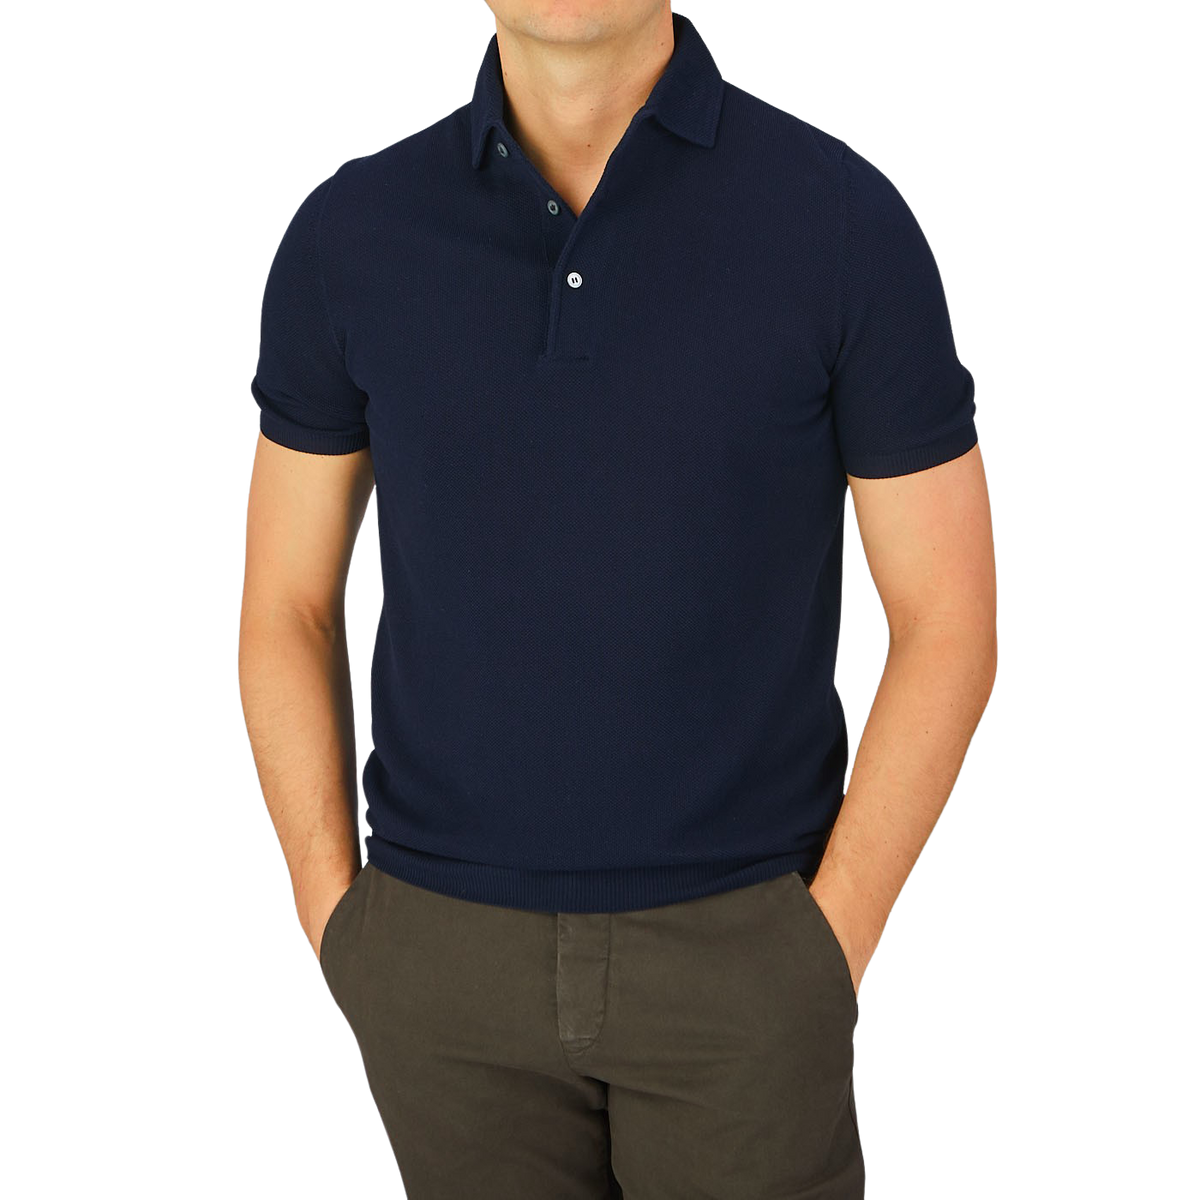 A man wearing a Navy Fresh Cotton Mesh Polo Shirt by Gran Sasso.